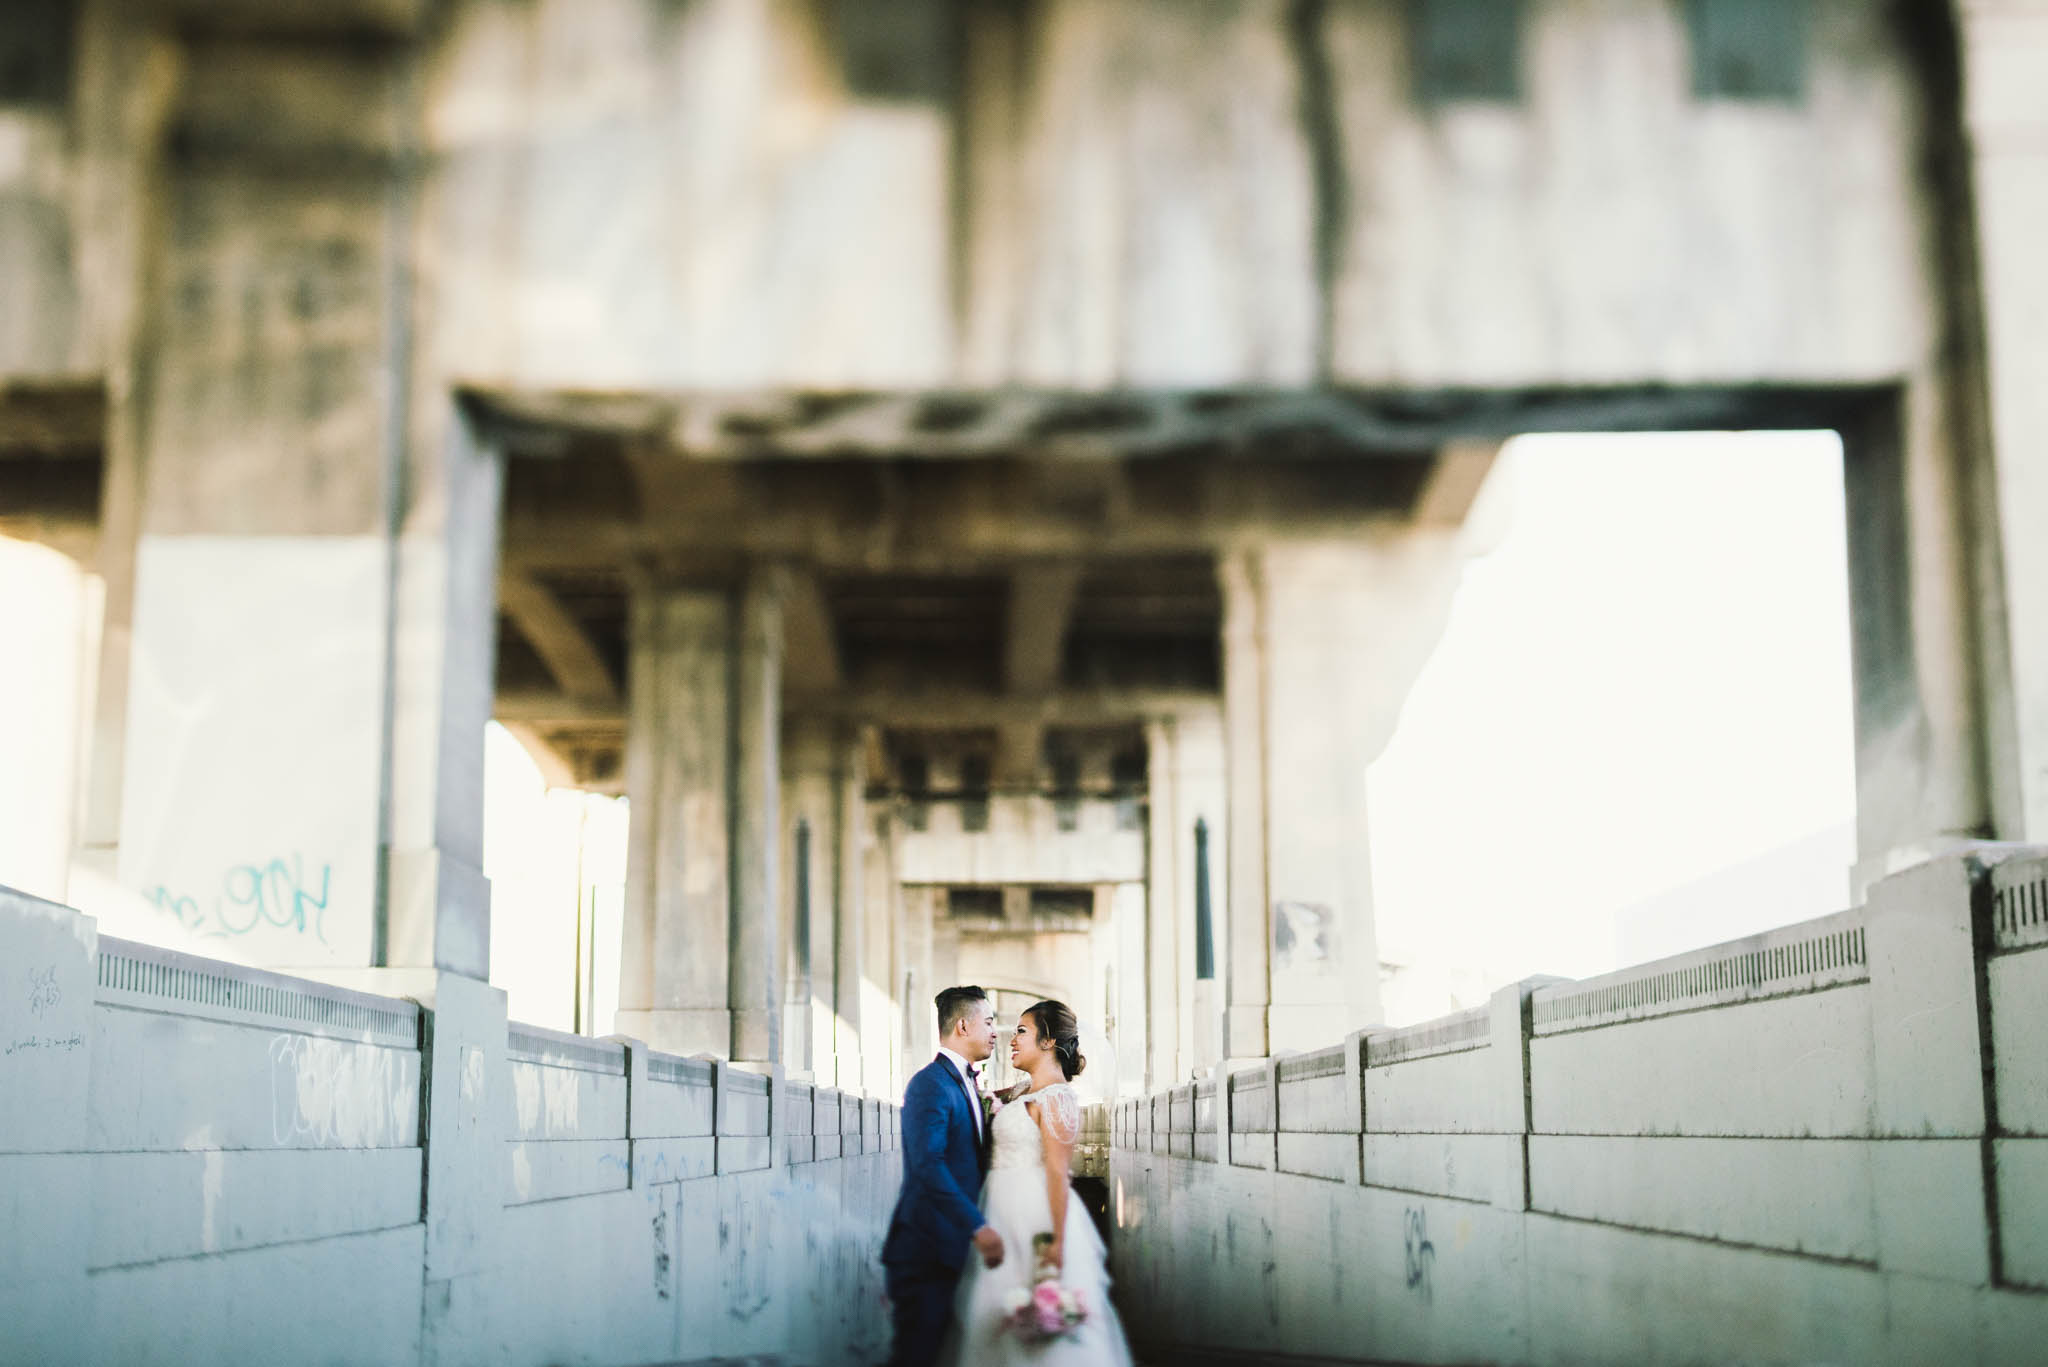 ©Isaiah & Taylor Photography - Los Angeles Wedding Photographer - Lot 613 Warehouse Space-48.jpg